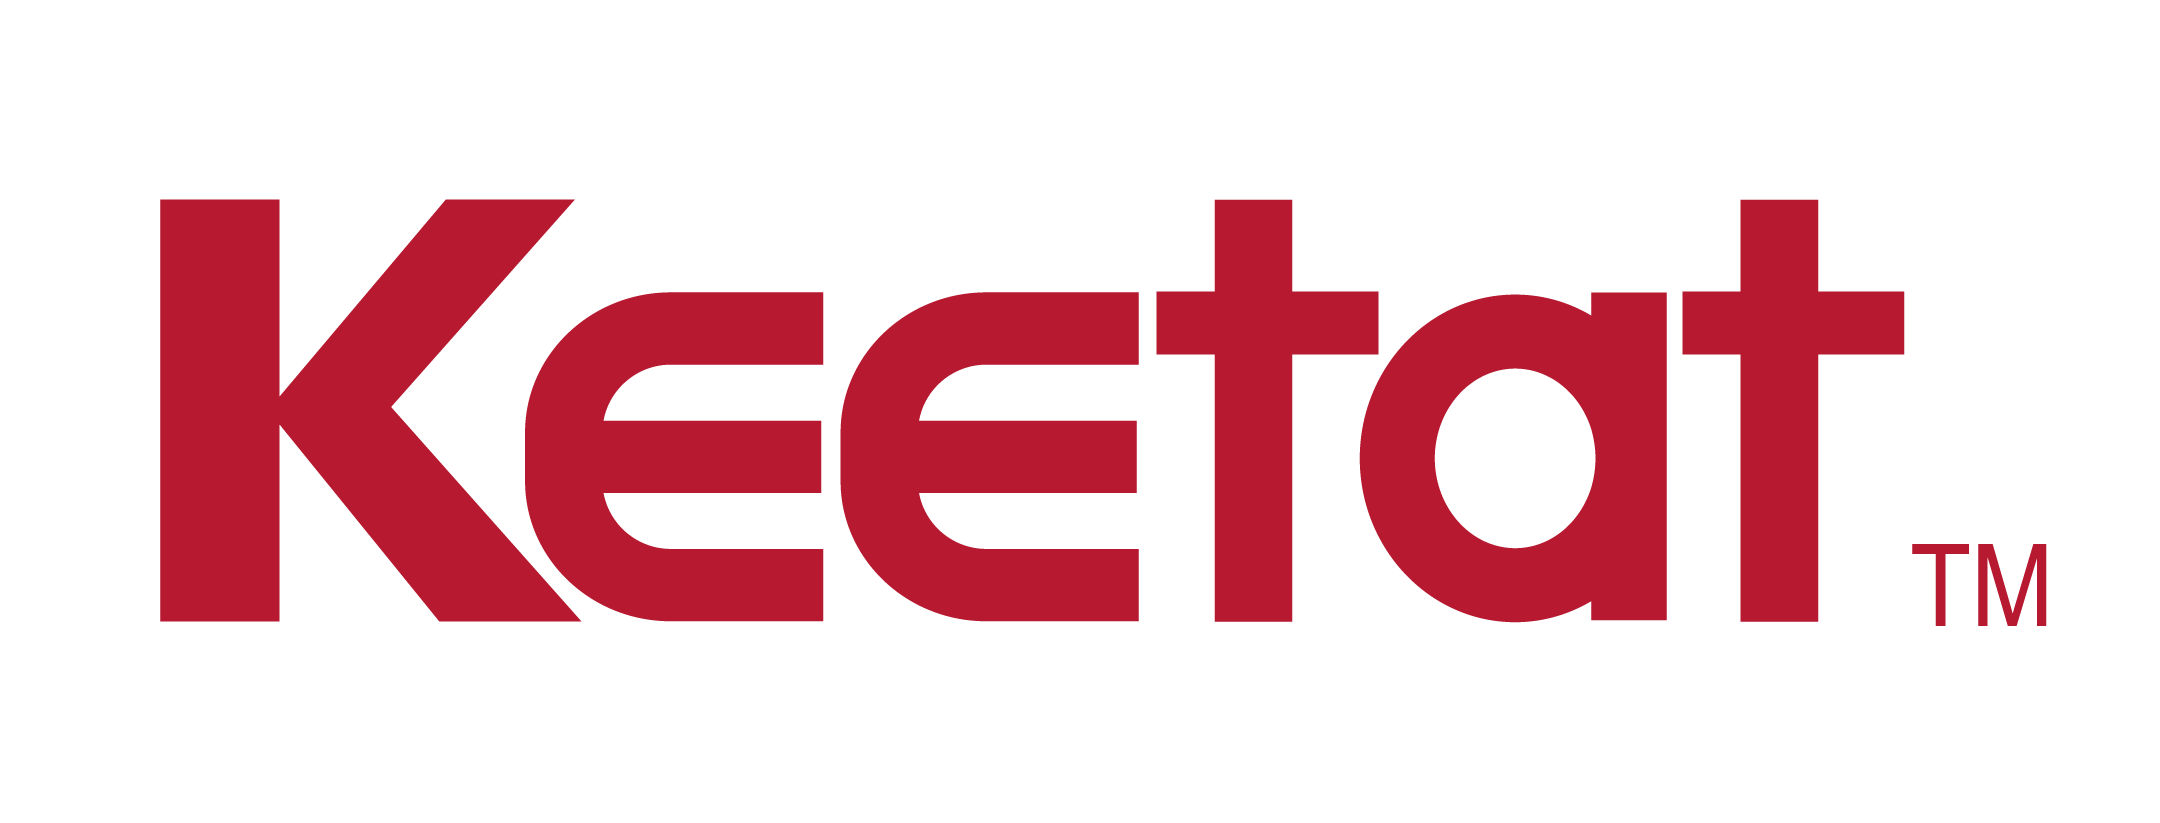 Kee Tat Innovative Technology Holdings Limited Logo